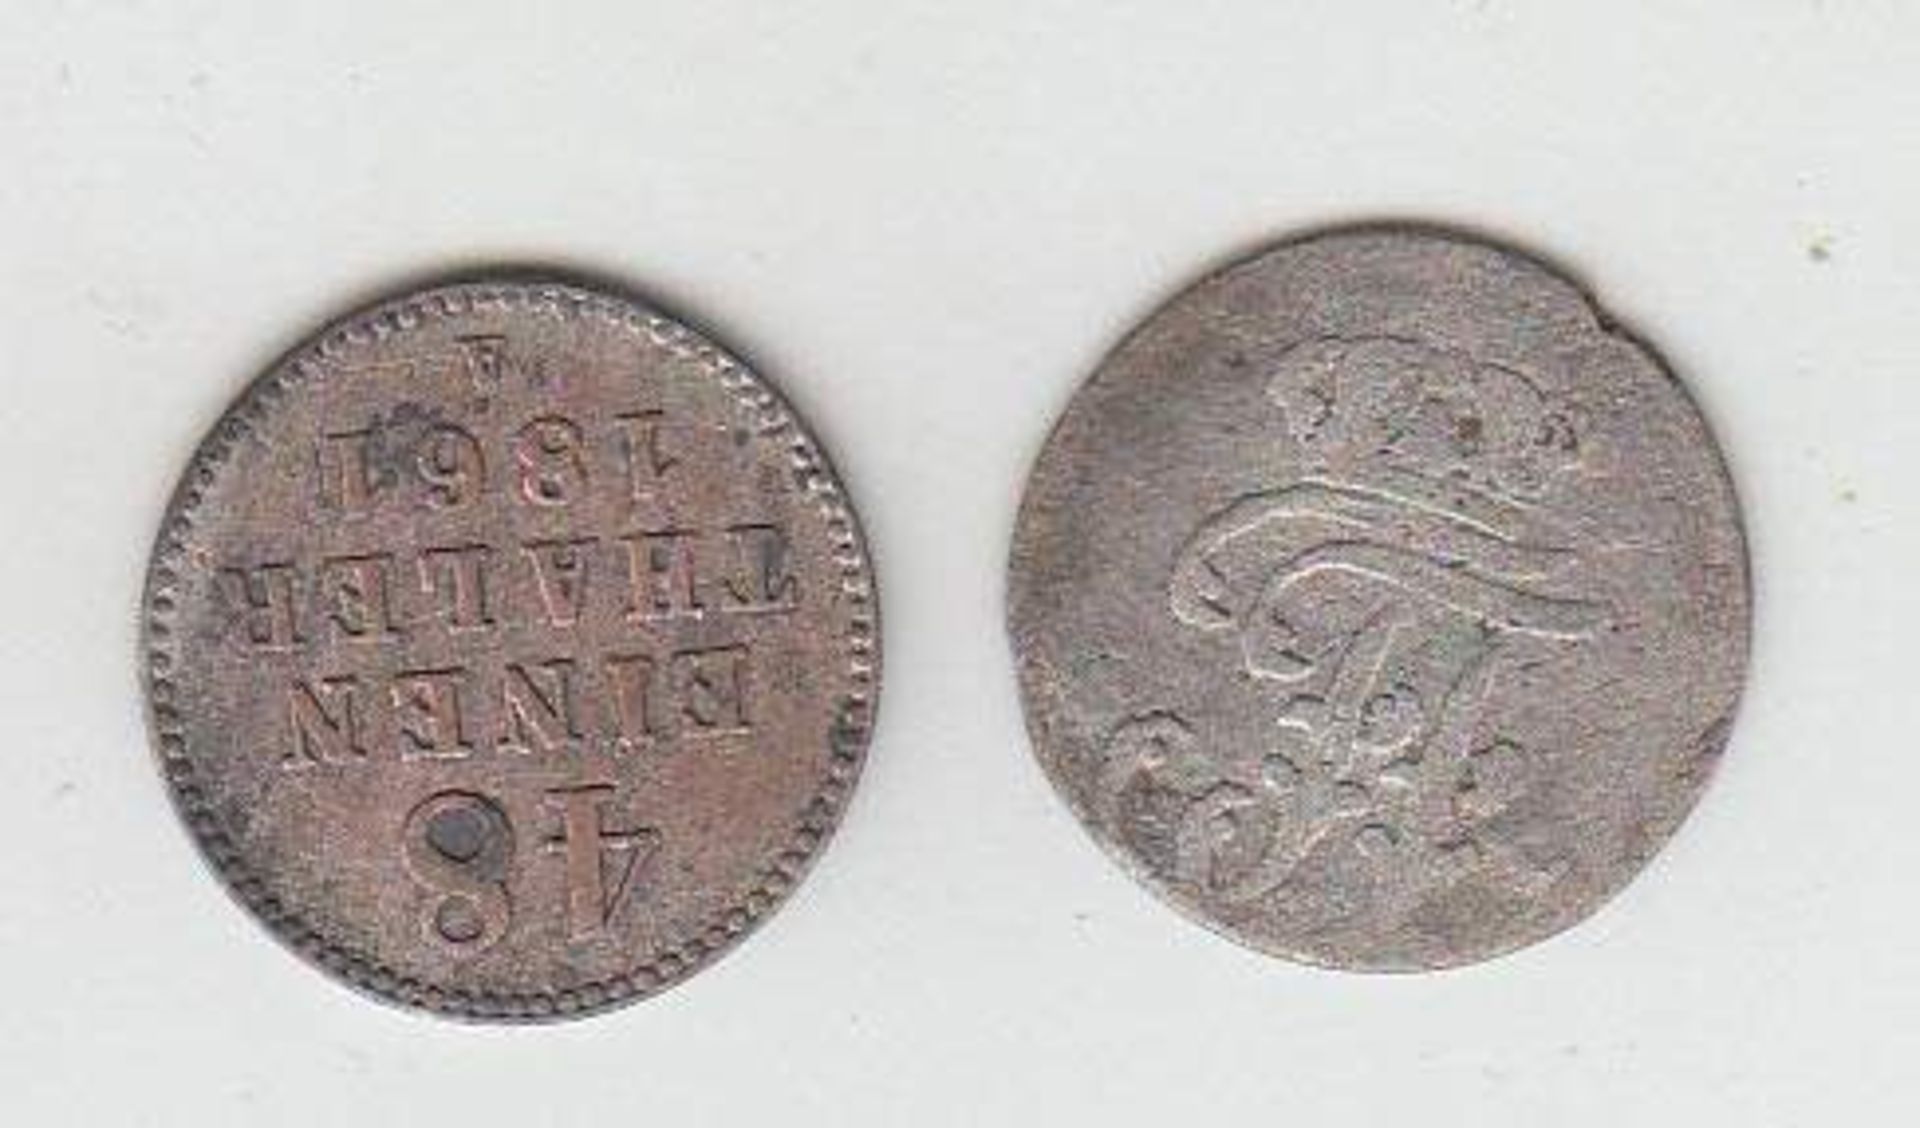 2 Münzen1 Shilling Mecklenburg 1799 u. 1/48 Taler Mecklenburg Schwerin 1861Aufrufpreis: 10 EUR - Image 2 of 2